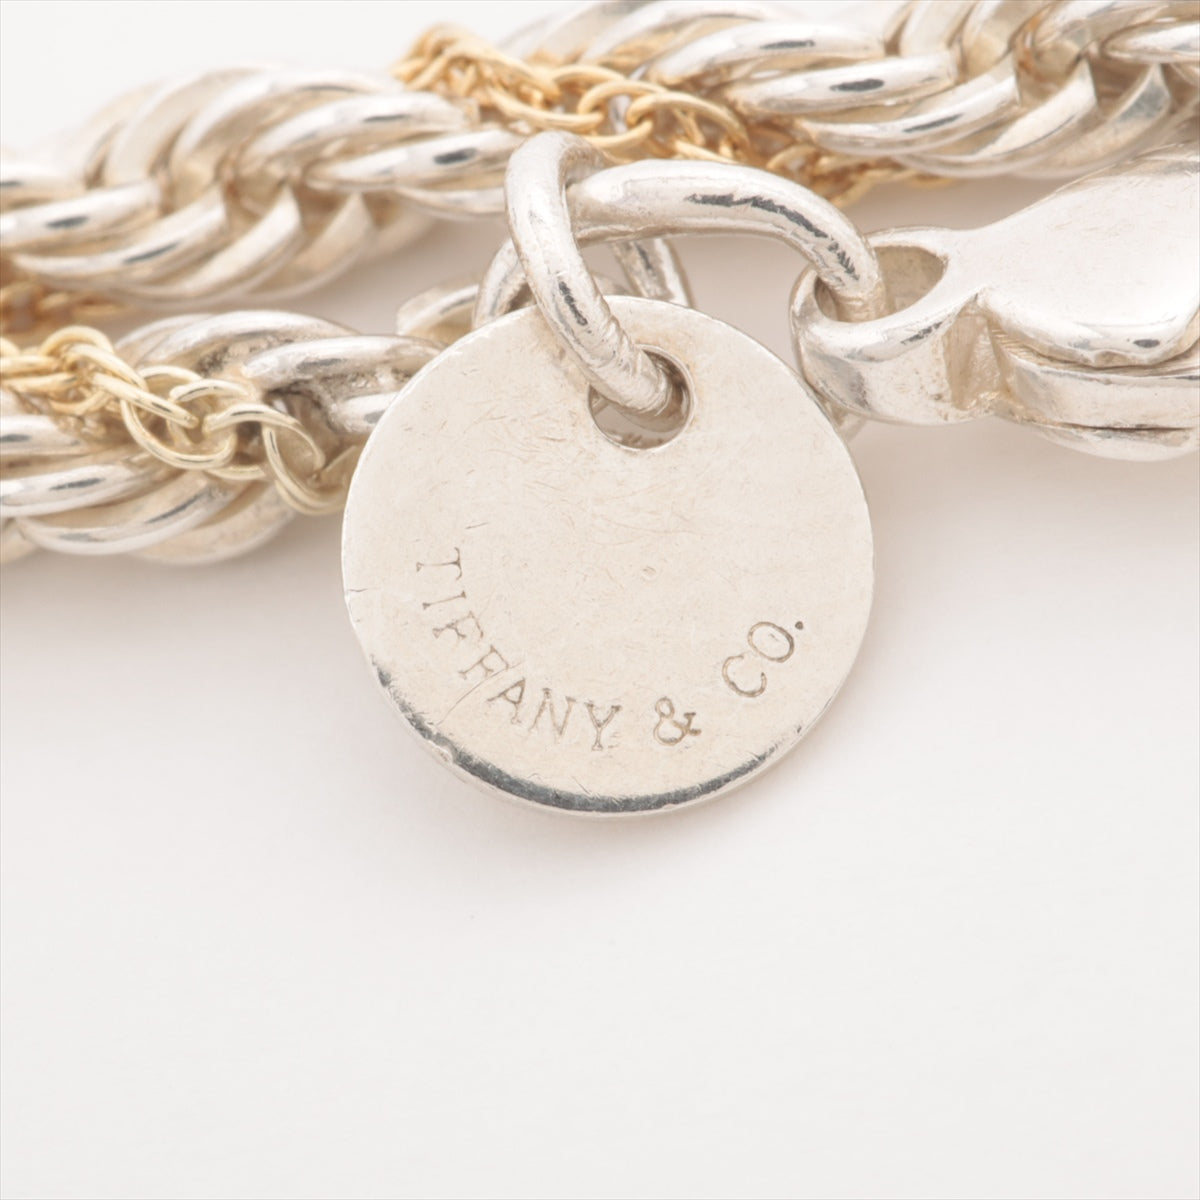 Tiffany Twist chain Necklace 925×750 14.6g Gold × Silver